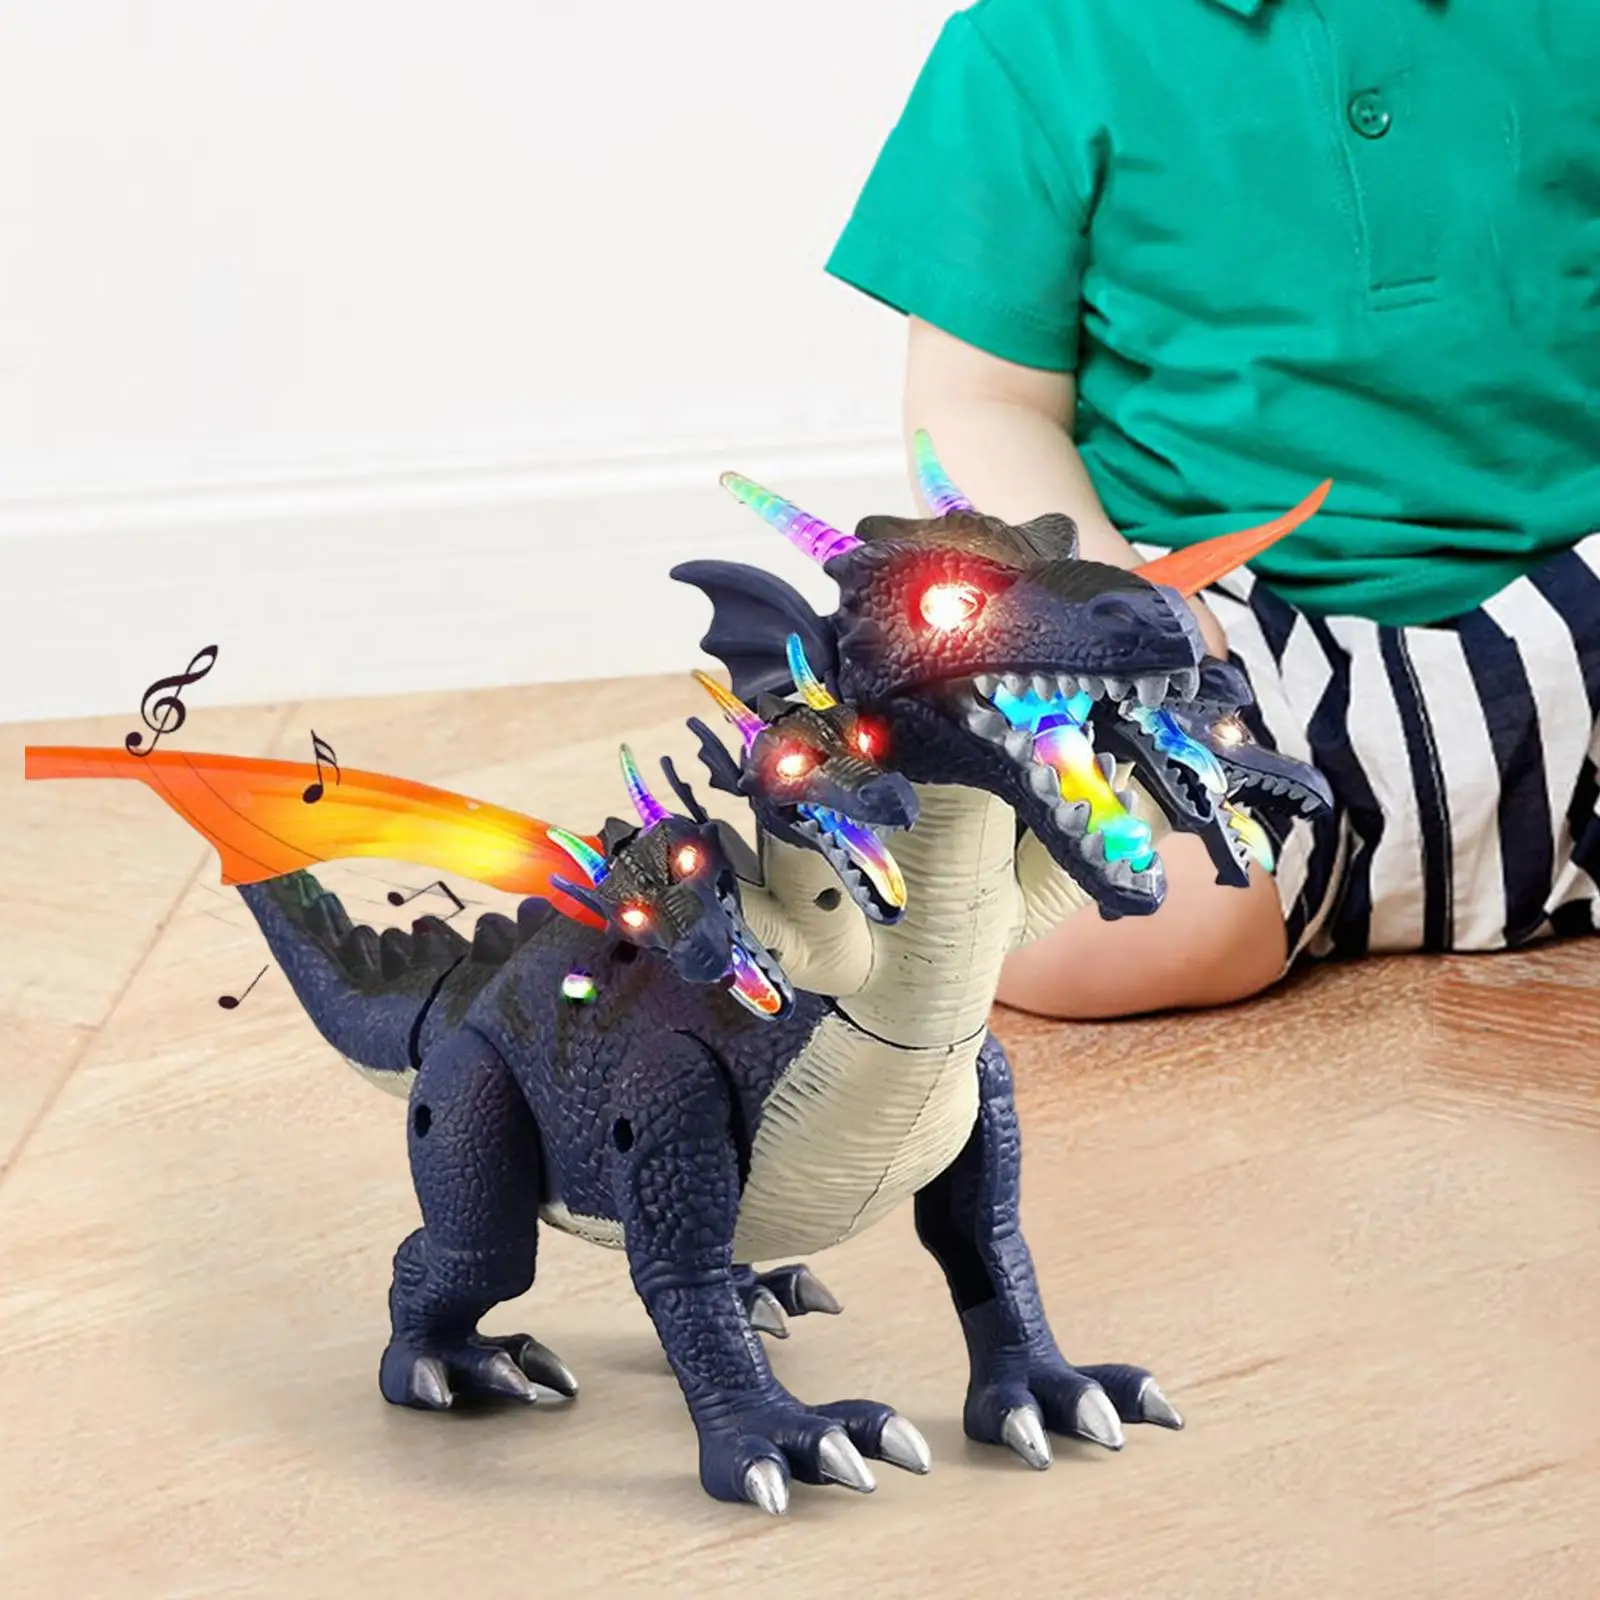 Electric Dinosaur Toys W/ Lights Roar Sound Five-Headed Birthday Gifts